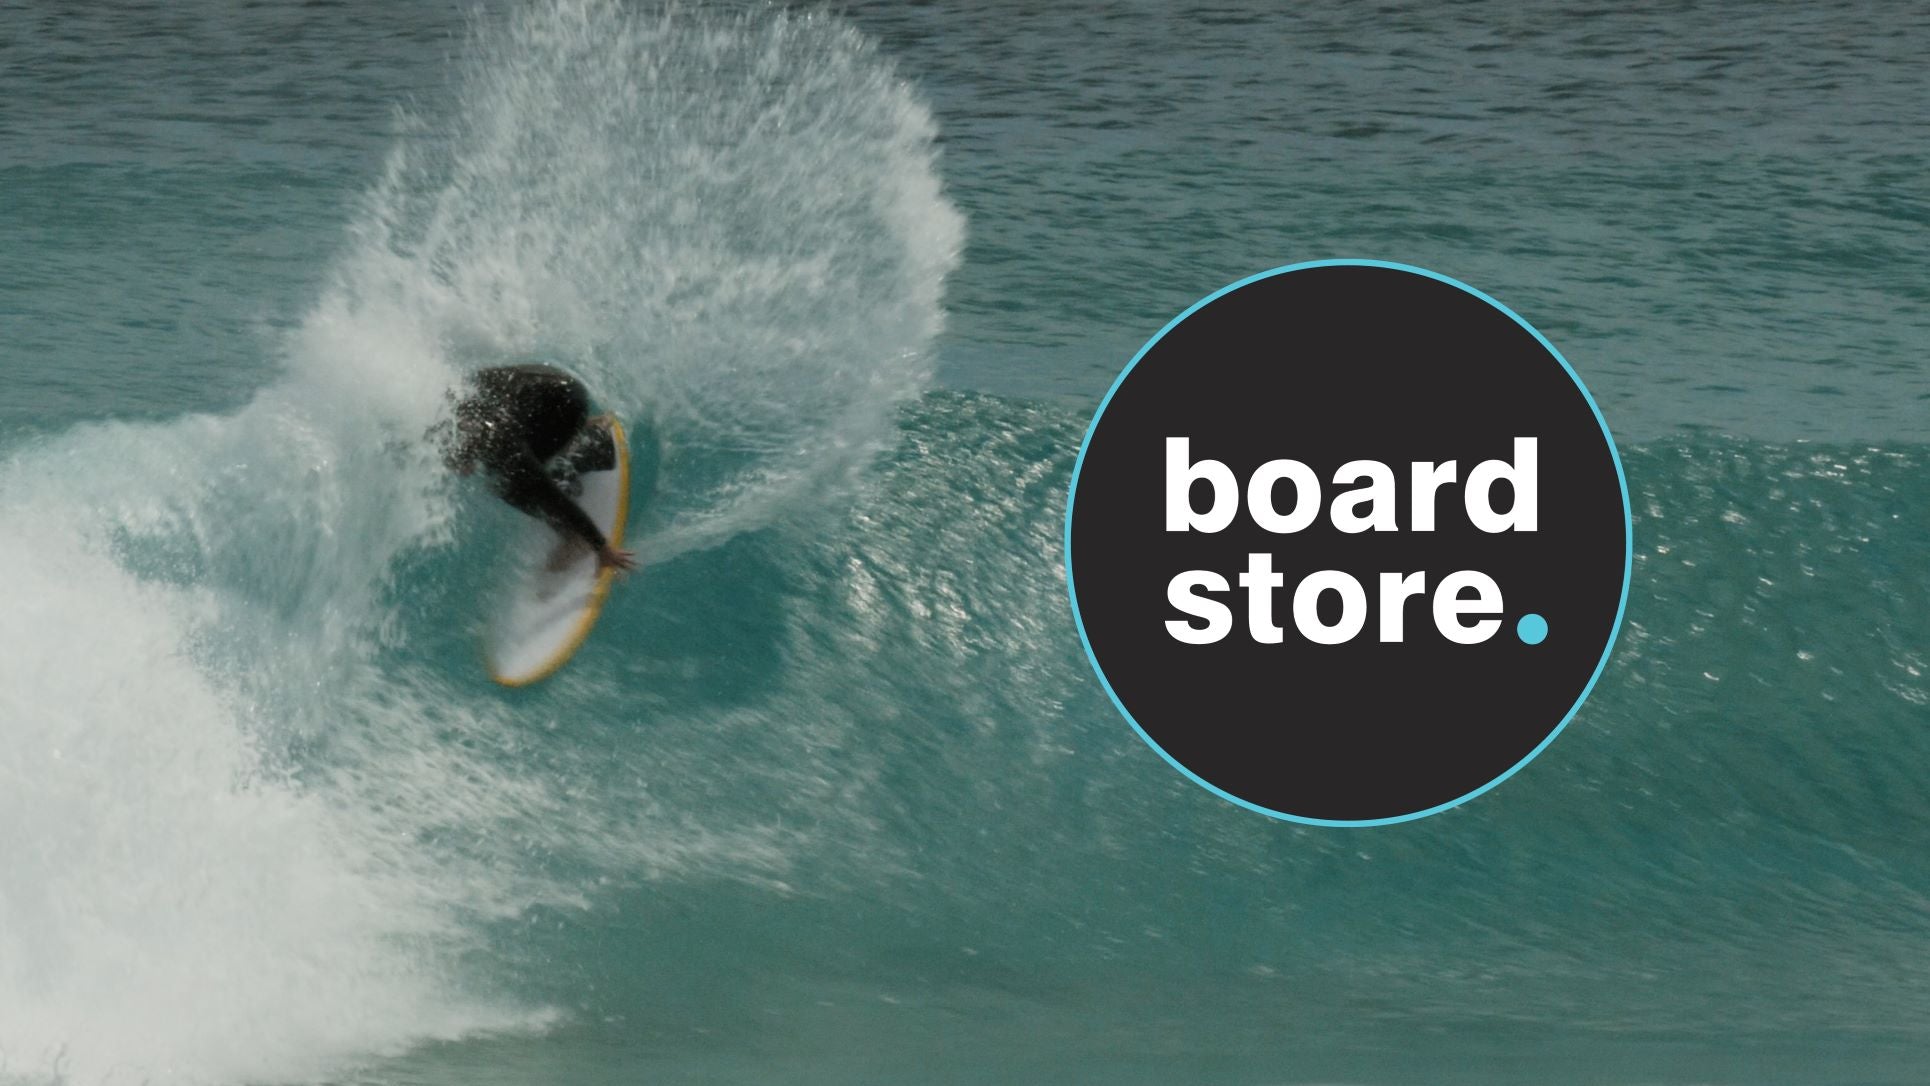 Board Store - Margaret River Regions Largest Surfboard Store